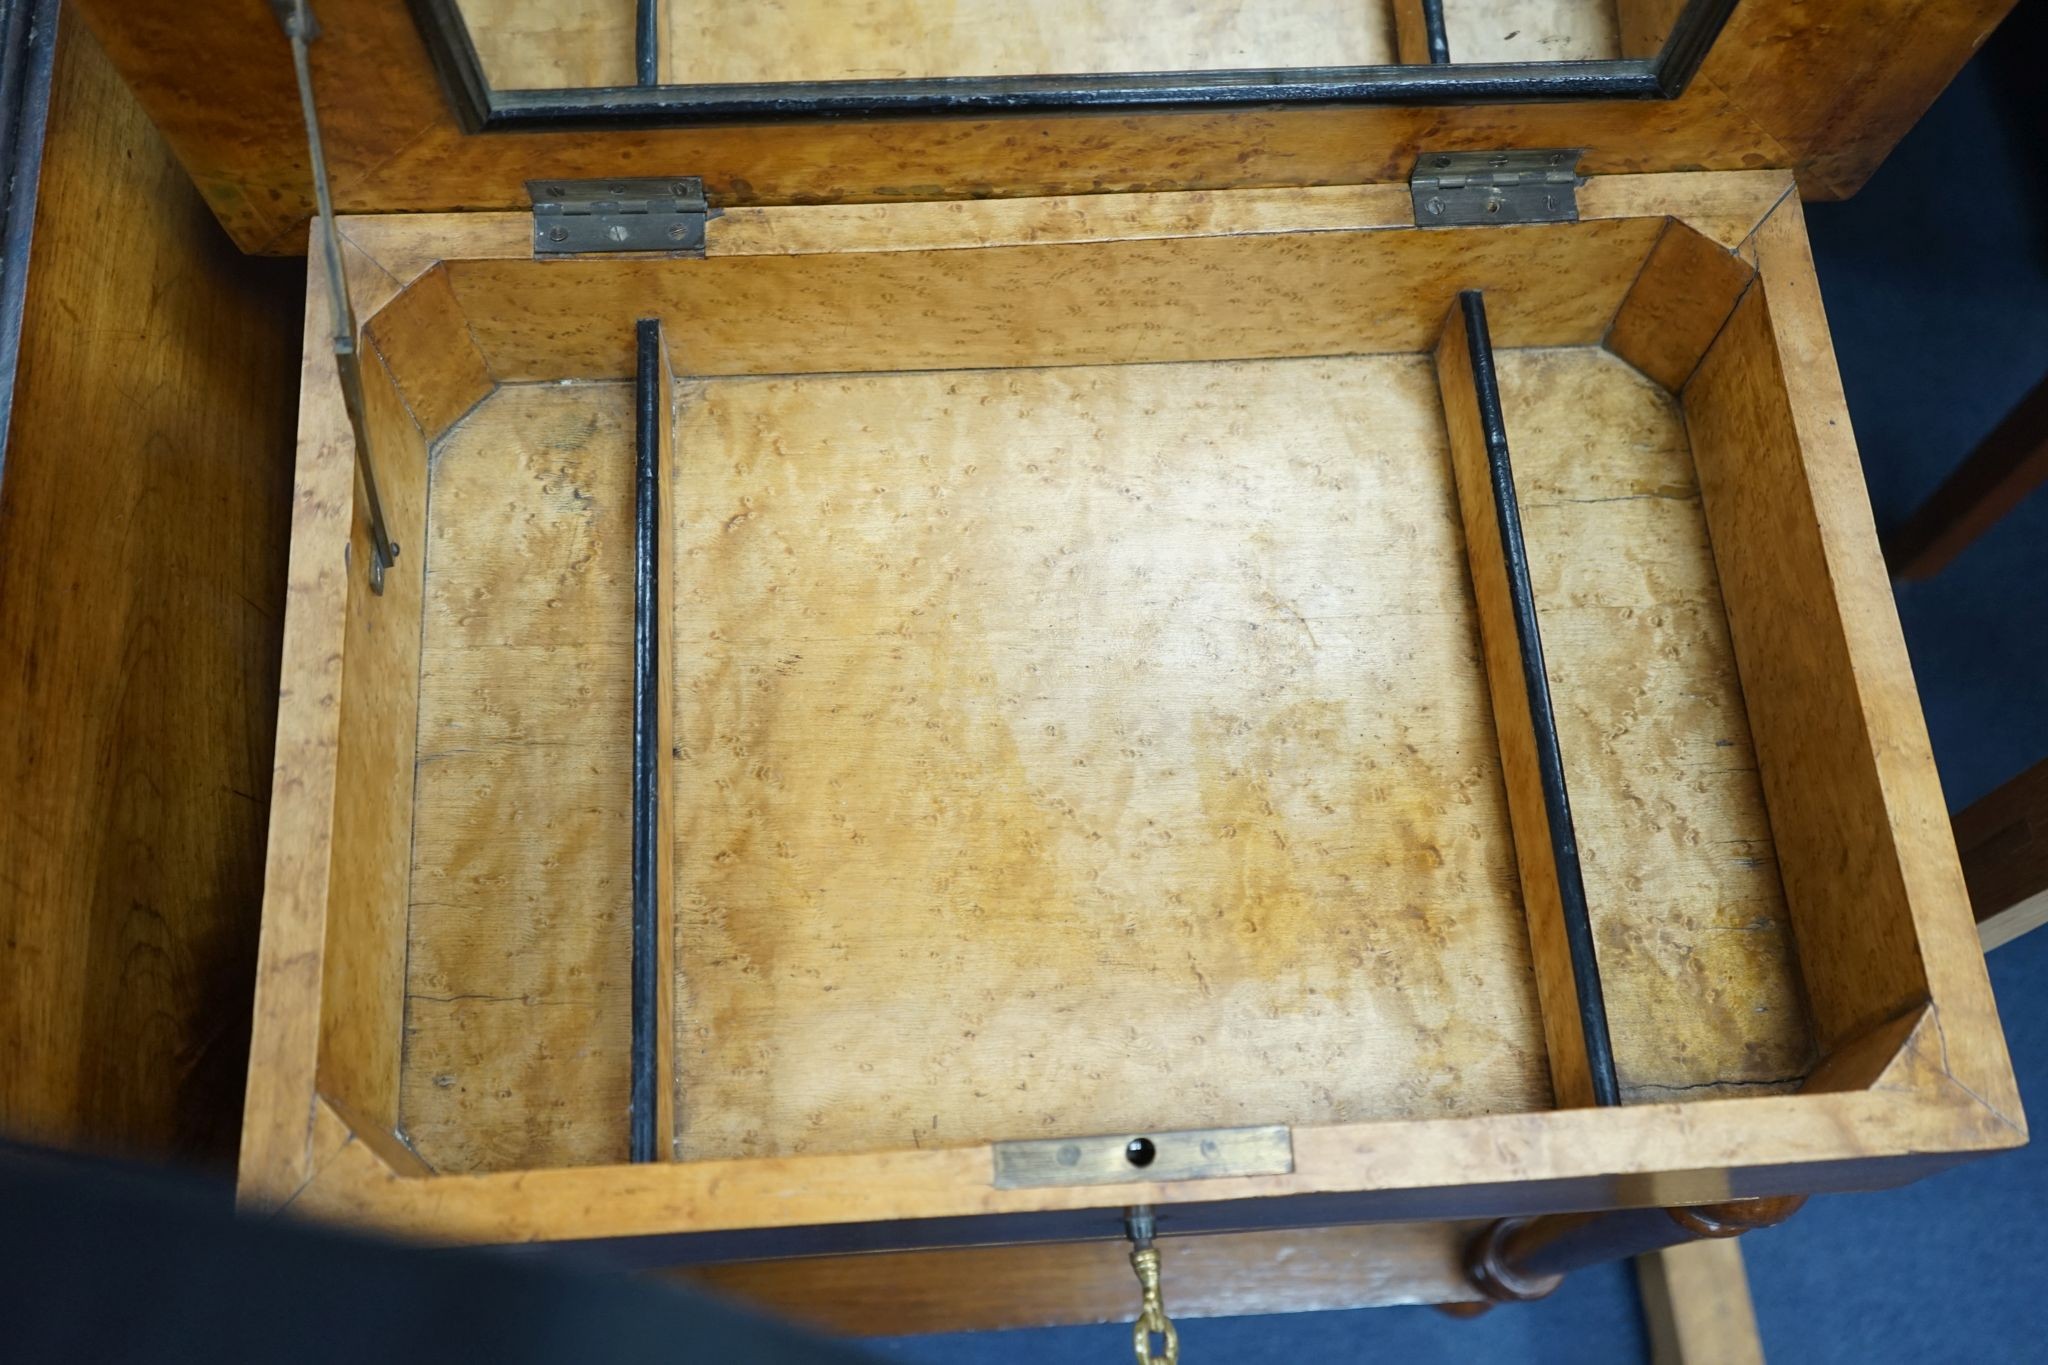 A 19th century French inlaid walnut work table, width 55cm, depth 37cm, height 71cm